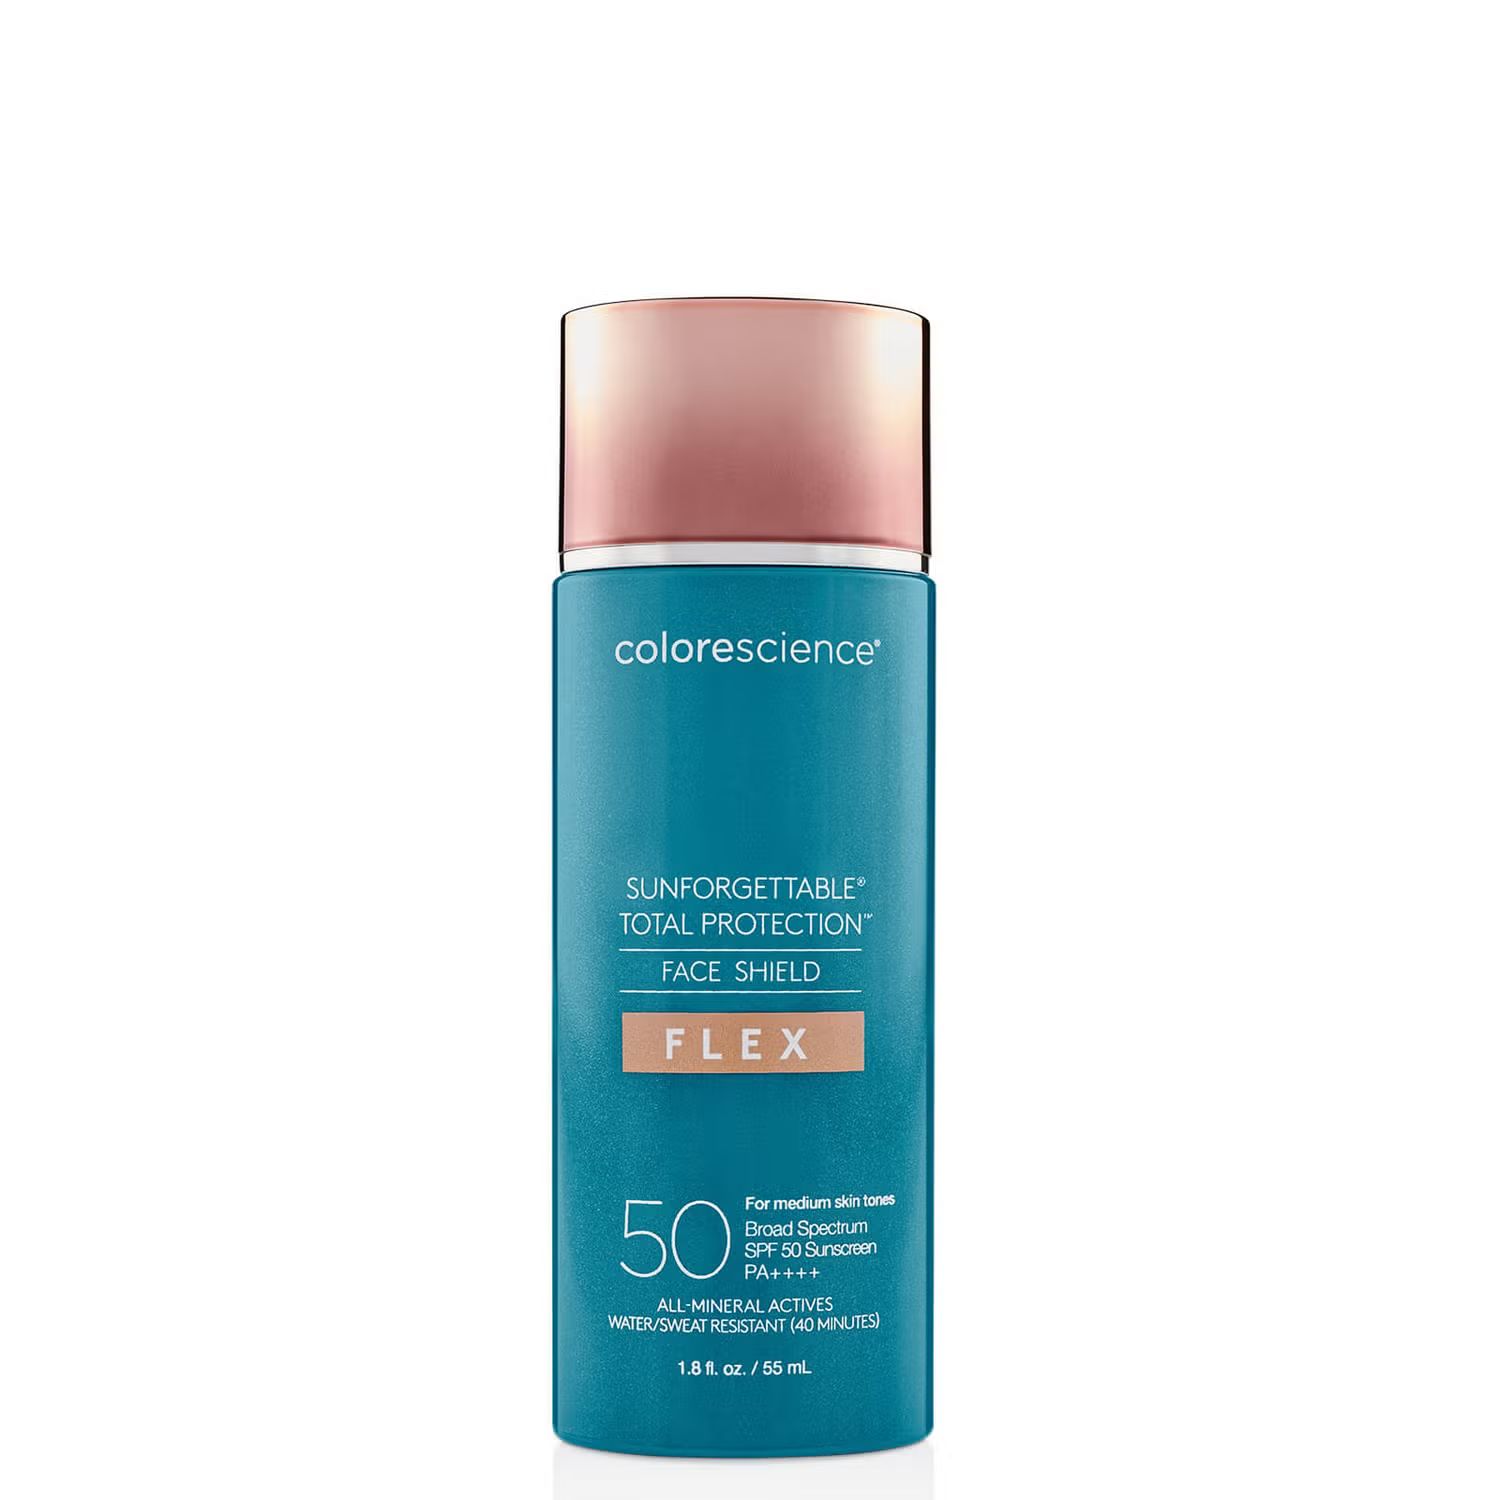 Colorescience Sunforgettable Total Protection Face Shield Flex SPF 50 - Medium 1.8 fl. oz | Skinstore